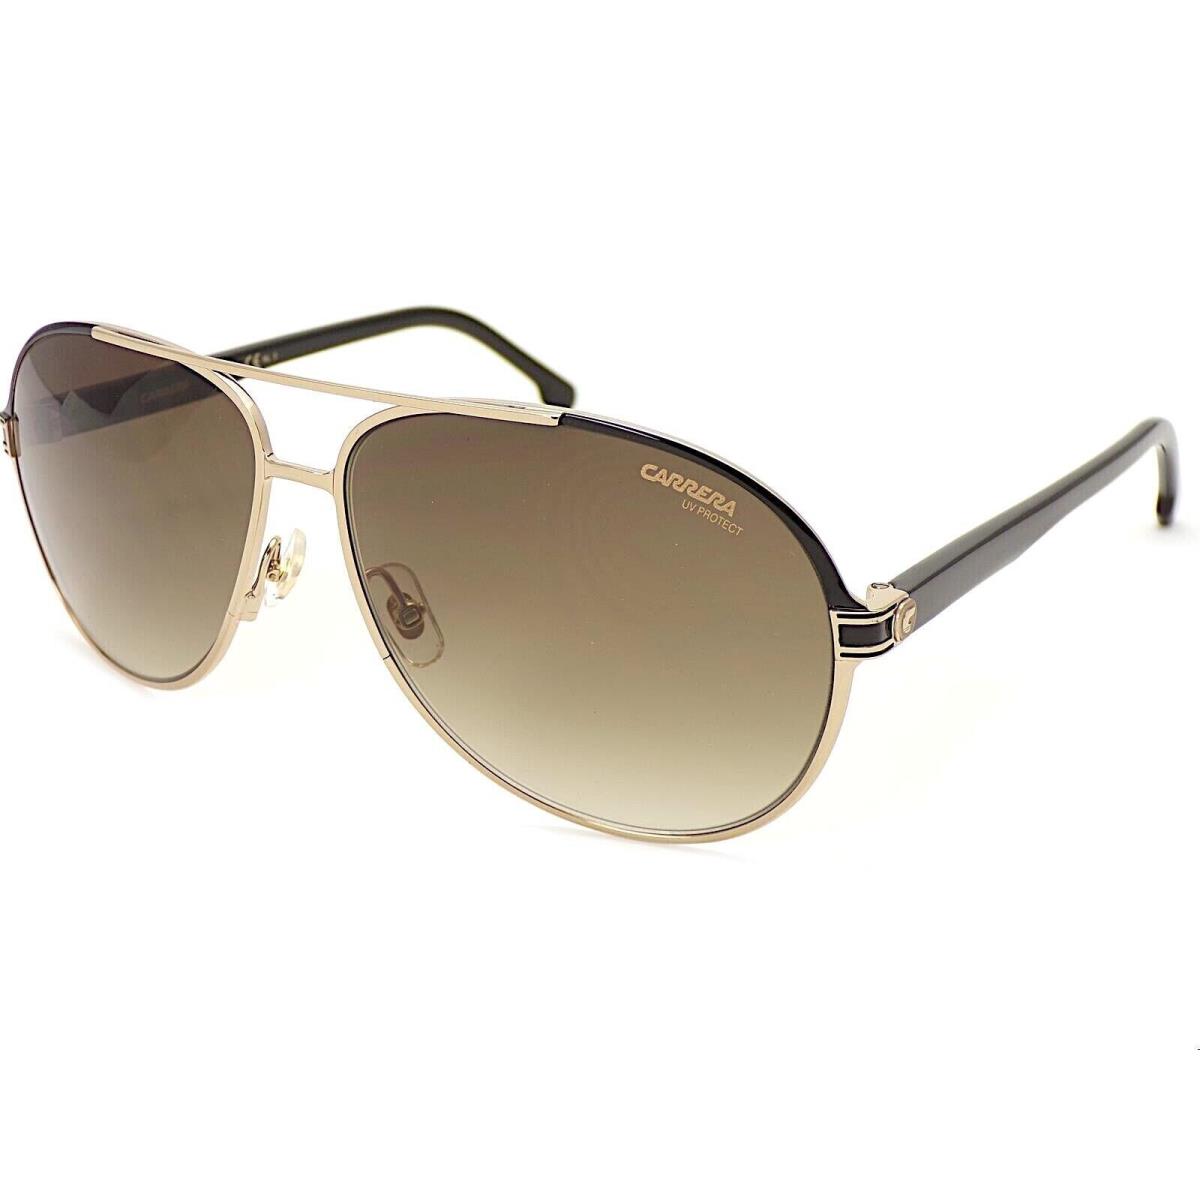 Carrera Sunglasses CA1051/S Rhl Gold Black Frame W/ Brown Gradient Lens - Frame: Gold & Black, Lens: Brown